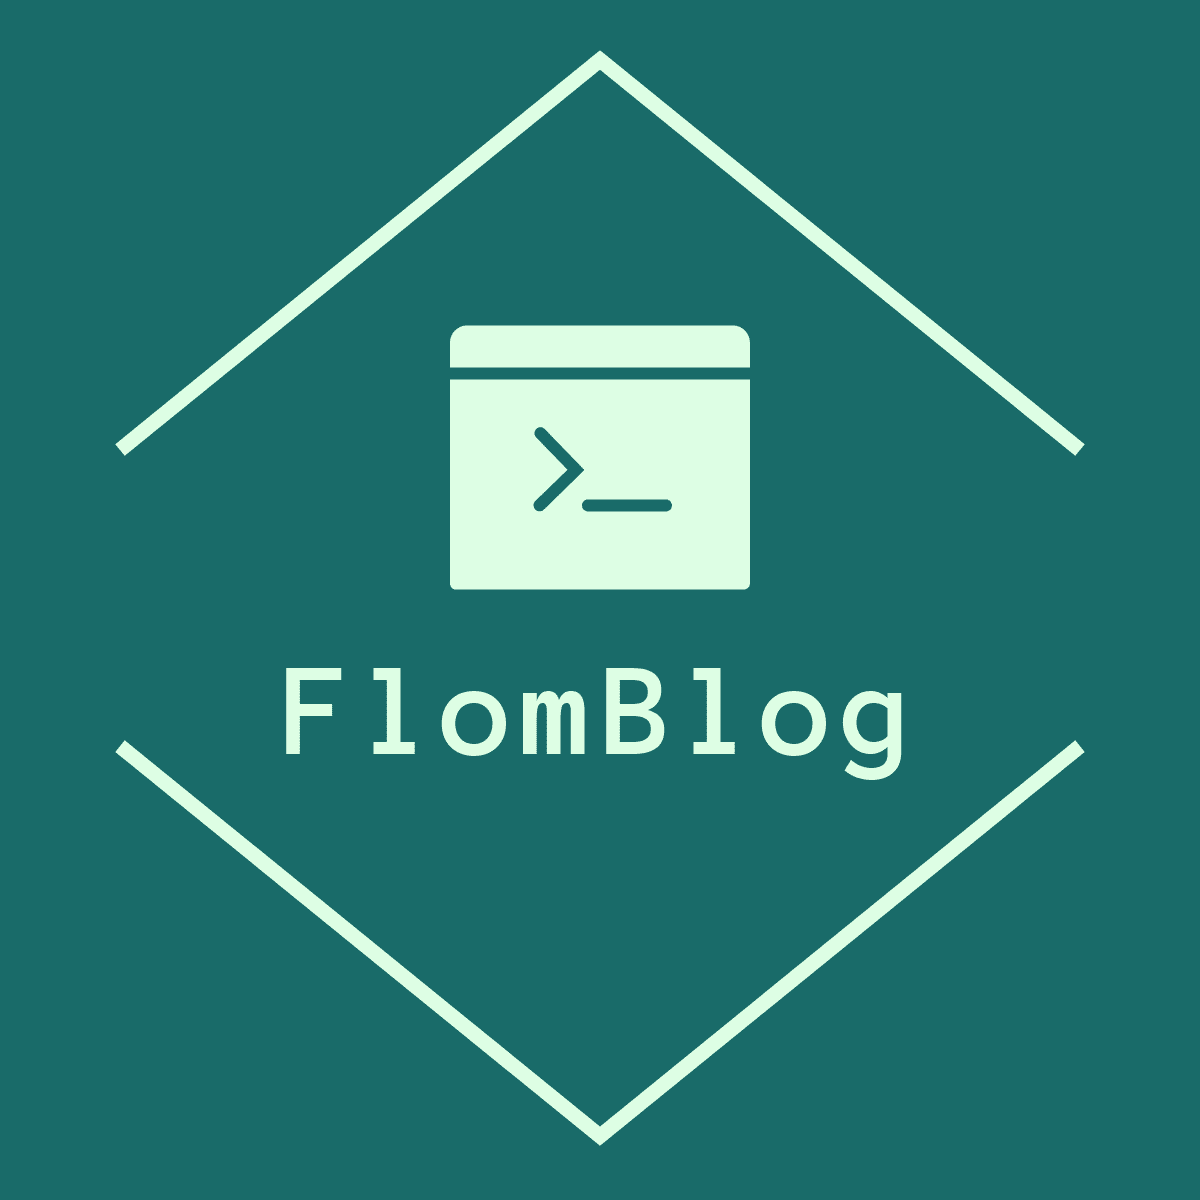 FlomBlog